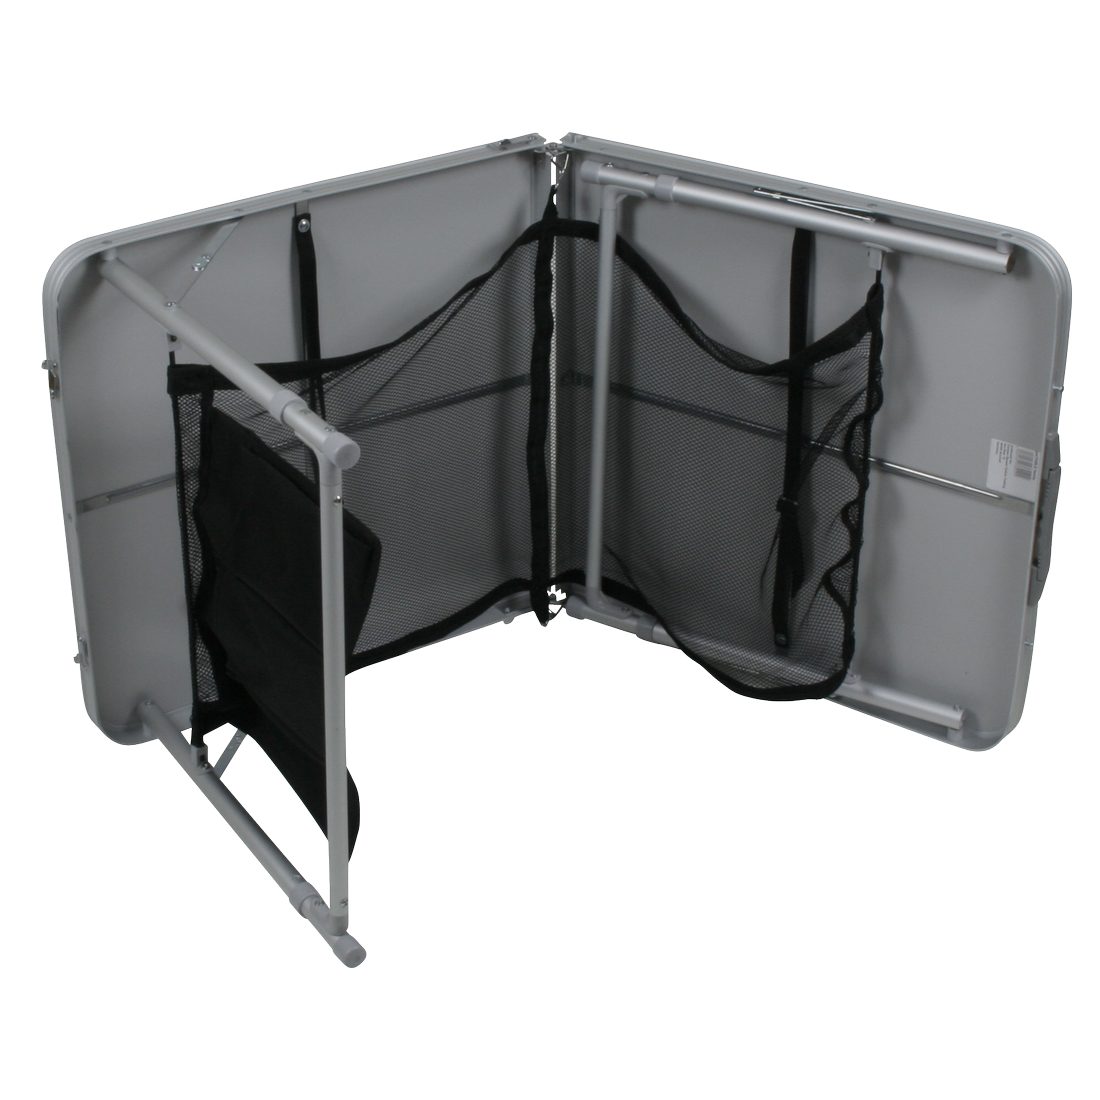 Tisch-Hocker-Set 10T Netz-Ablagefäche 4 Koffer Family 64x64x9cm 10T - Mobiles Personen Aluminium + Portable im Campingtisch